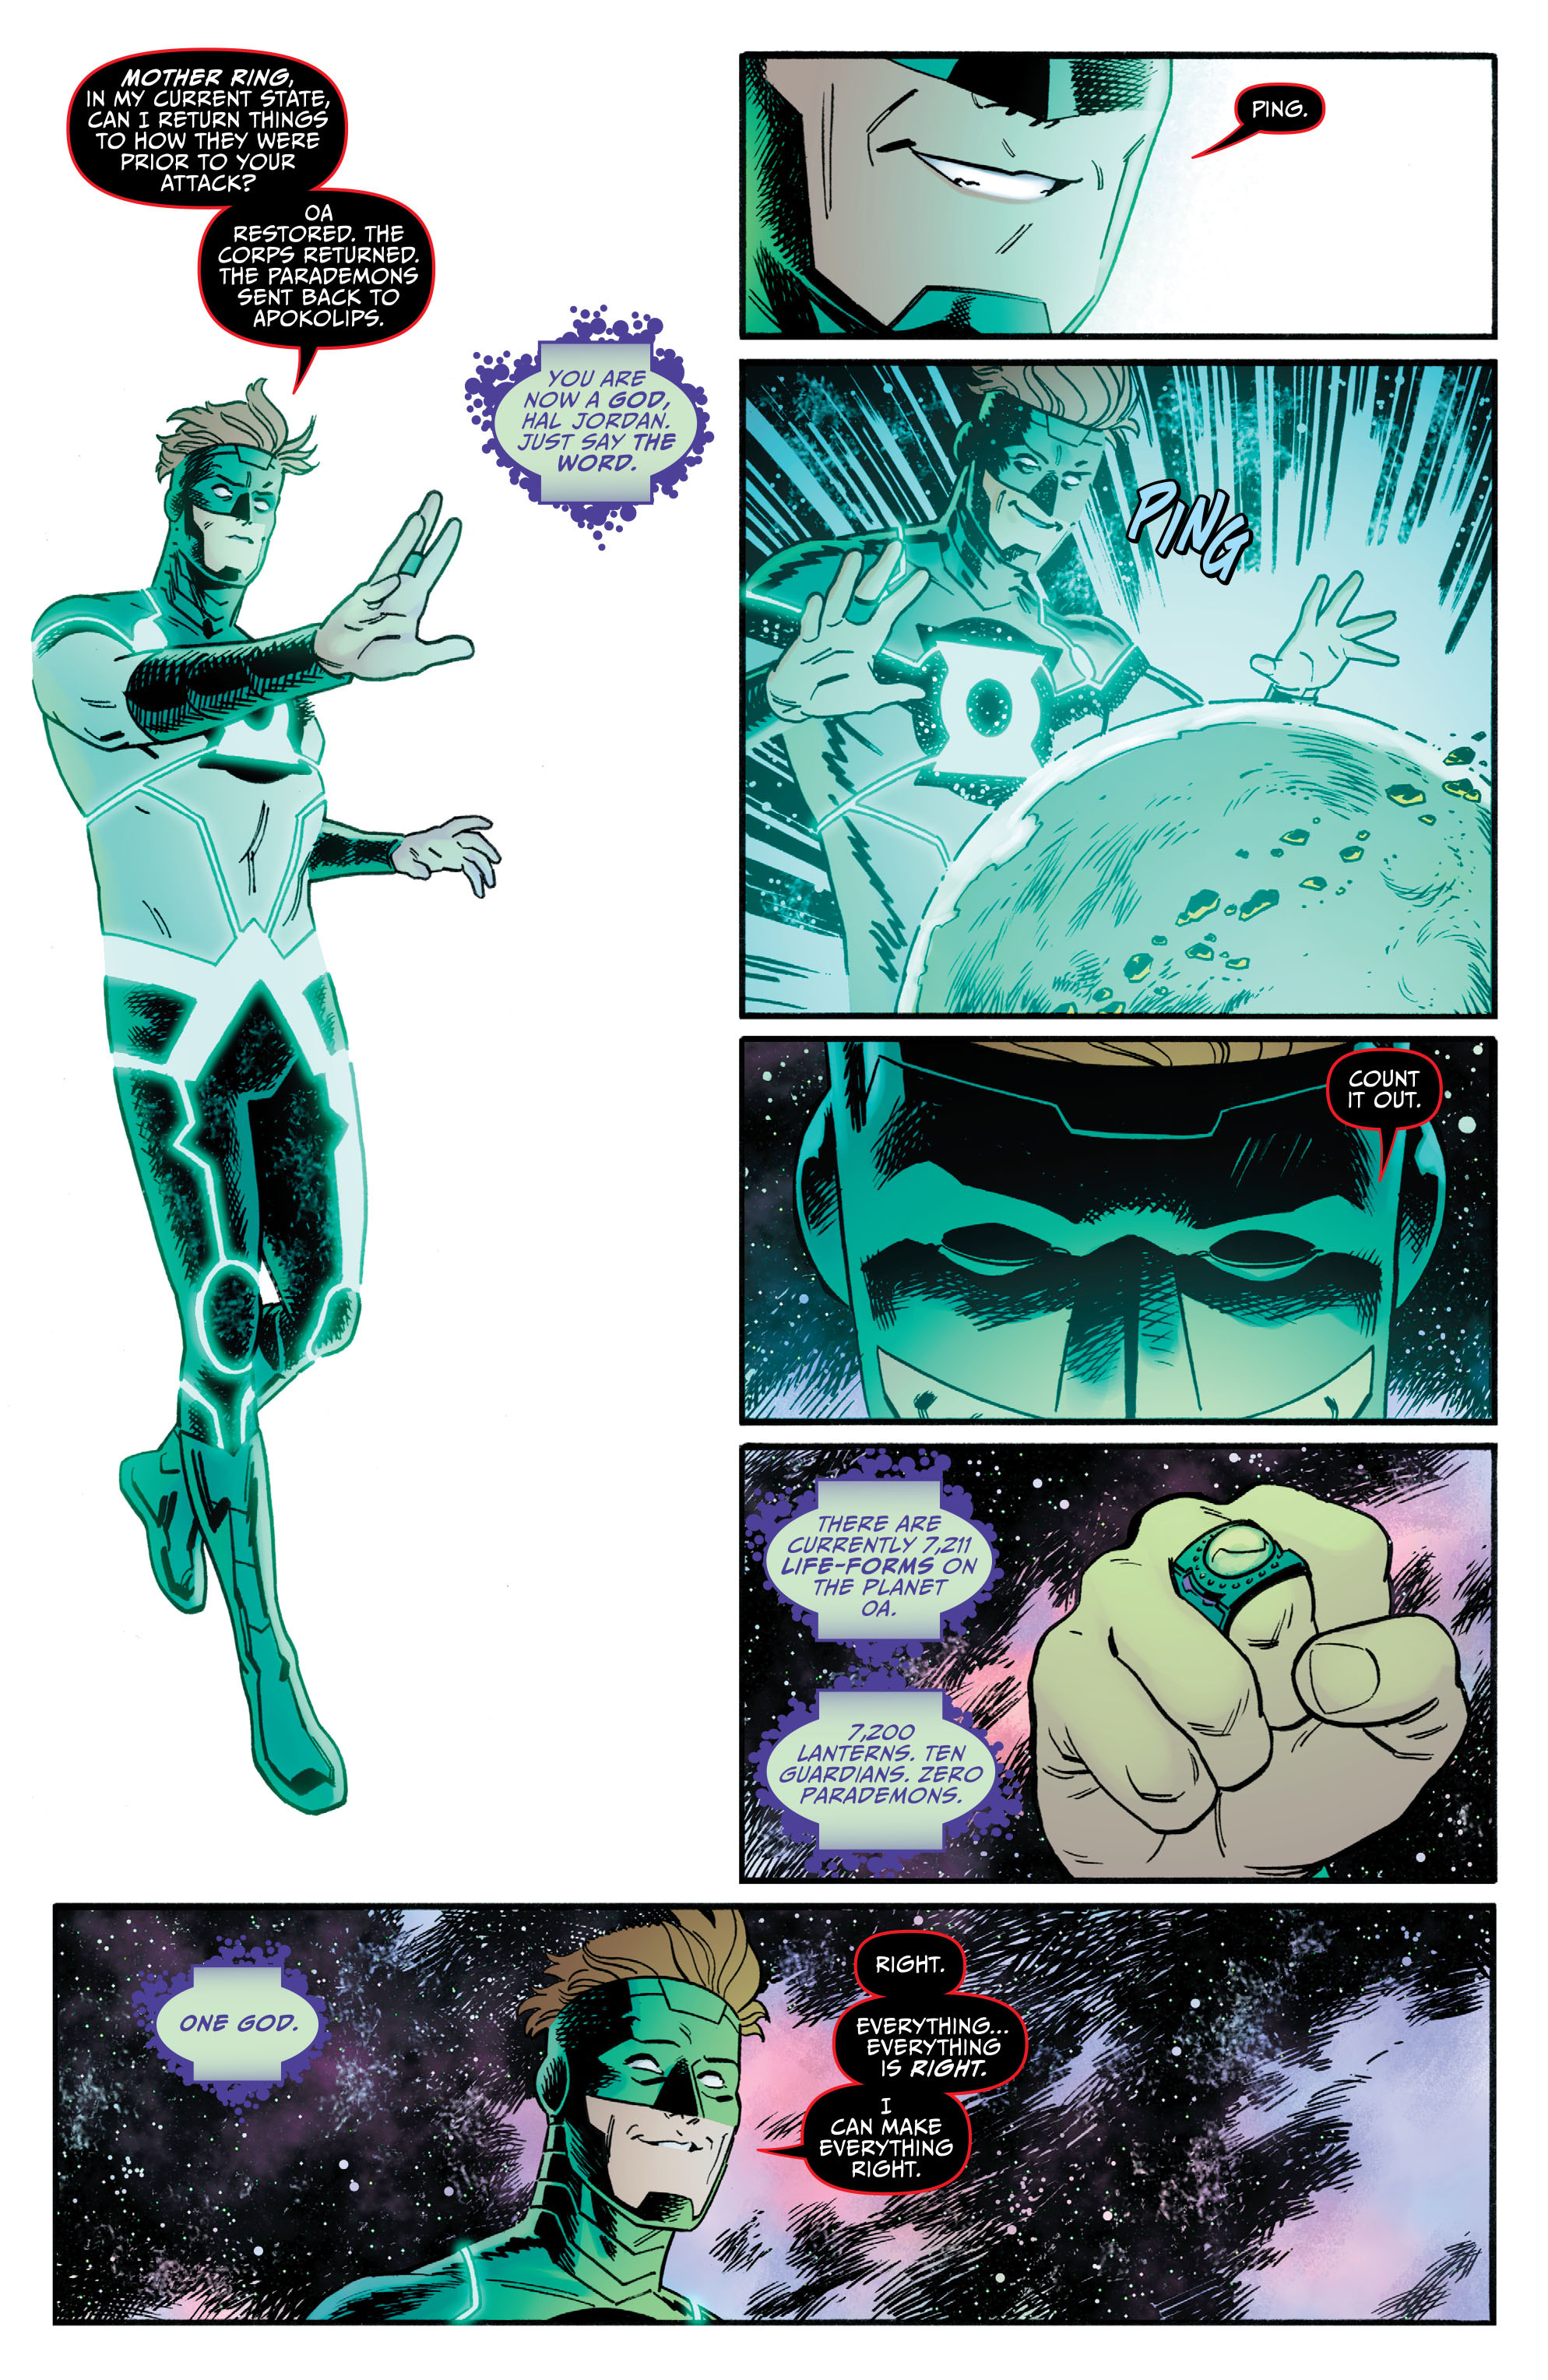 Justice League Darkseid War Green Lantern Issue 1 Read Justice League